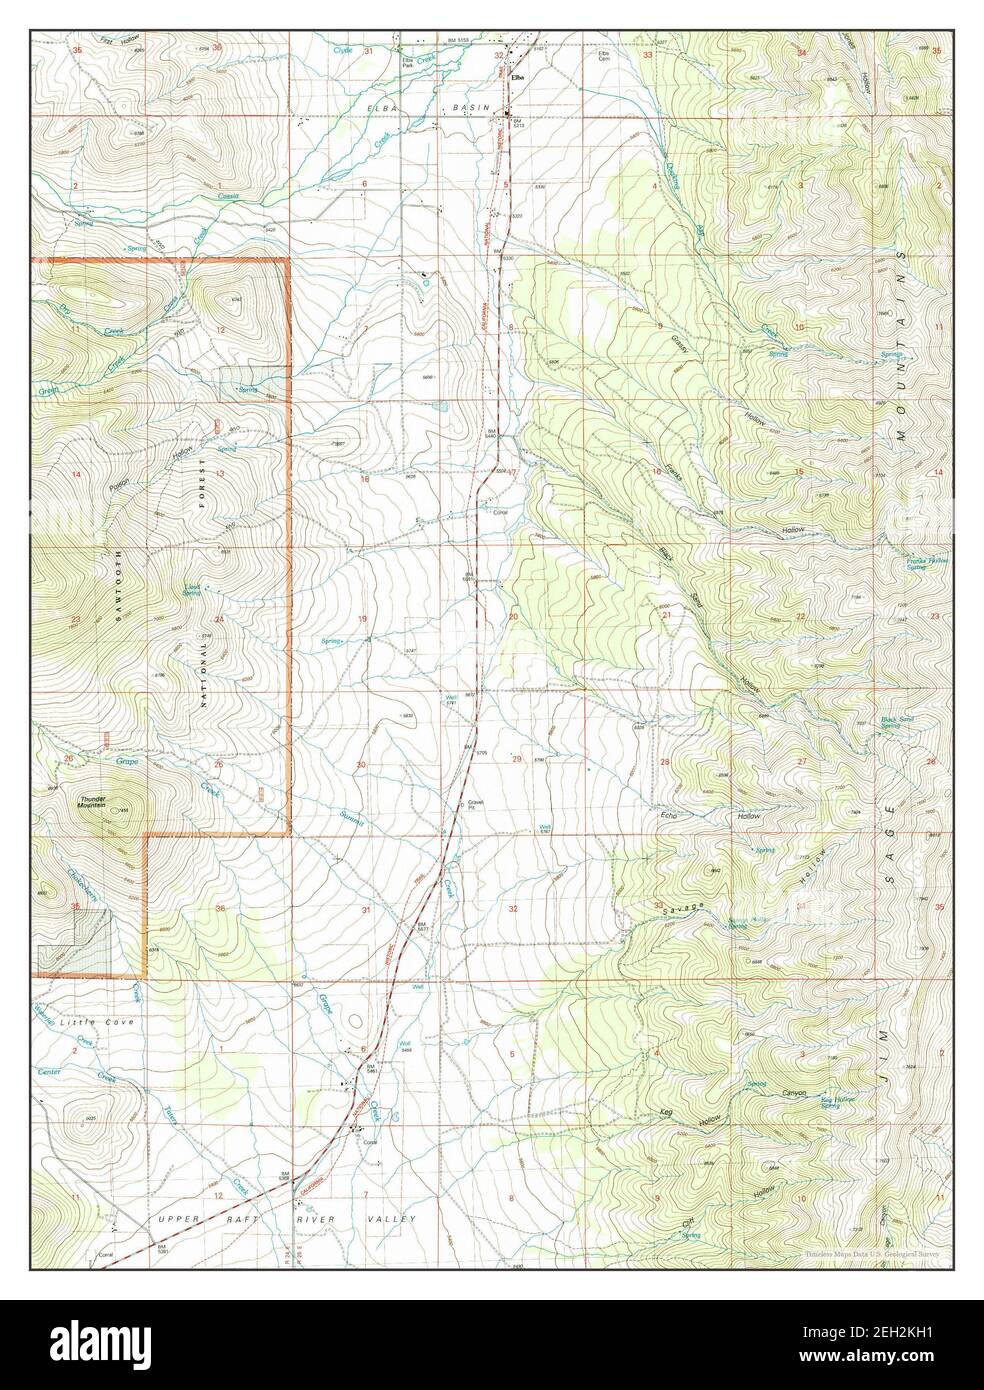 Elba, Idaho, map 2001, 1:24000, United States of America by Timeless Maps, data U.S. Geological Survey Stock Photo